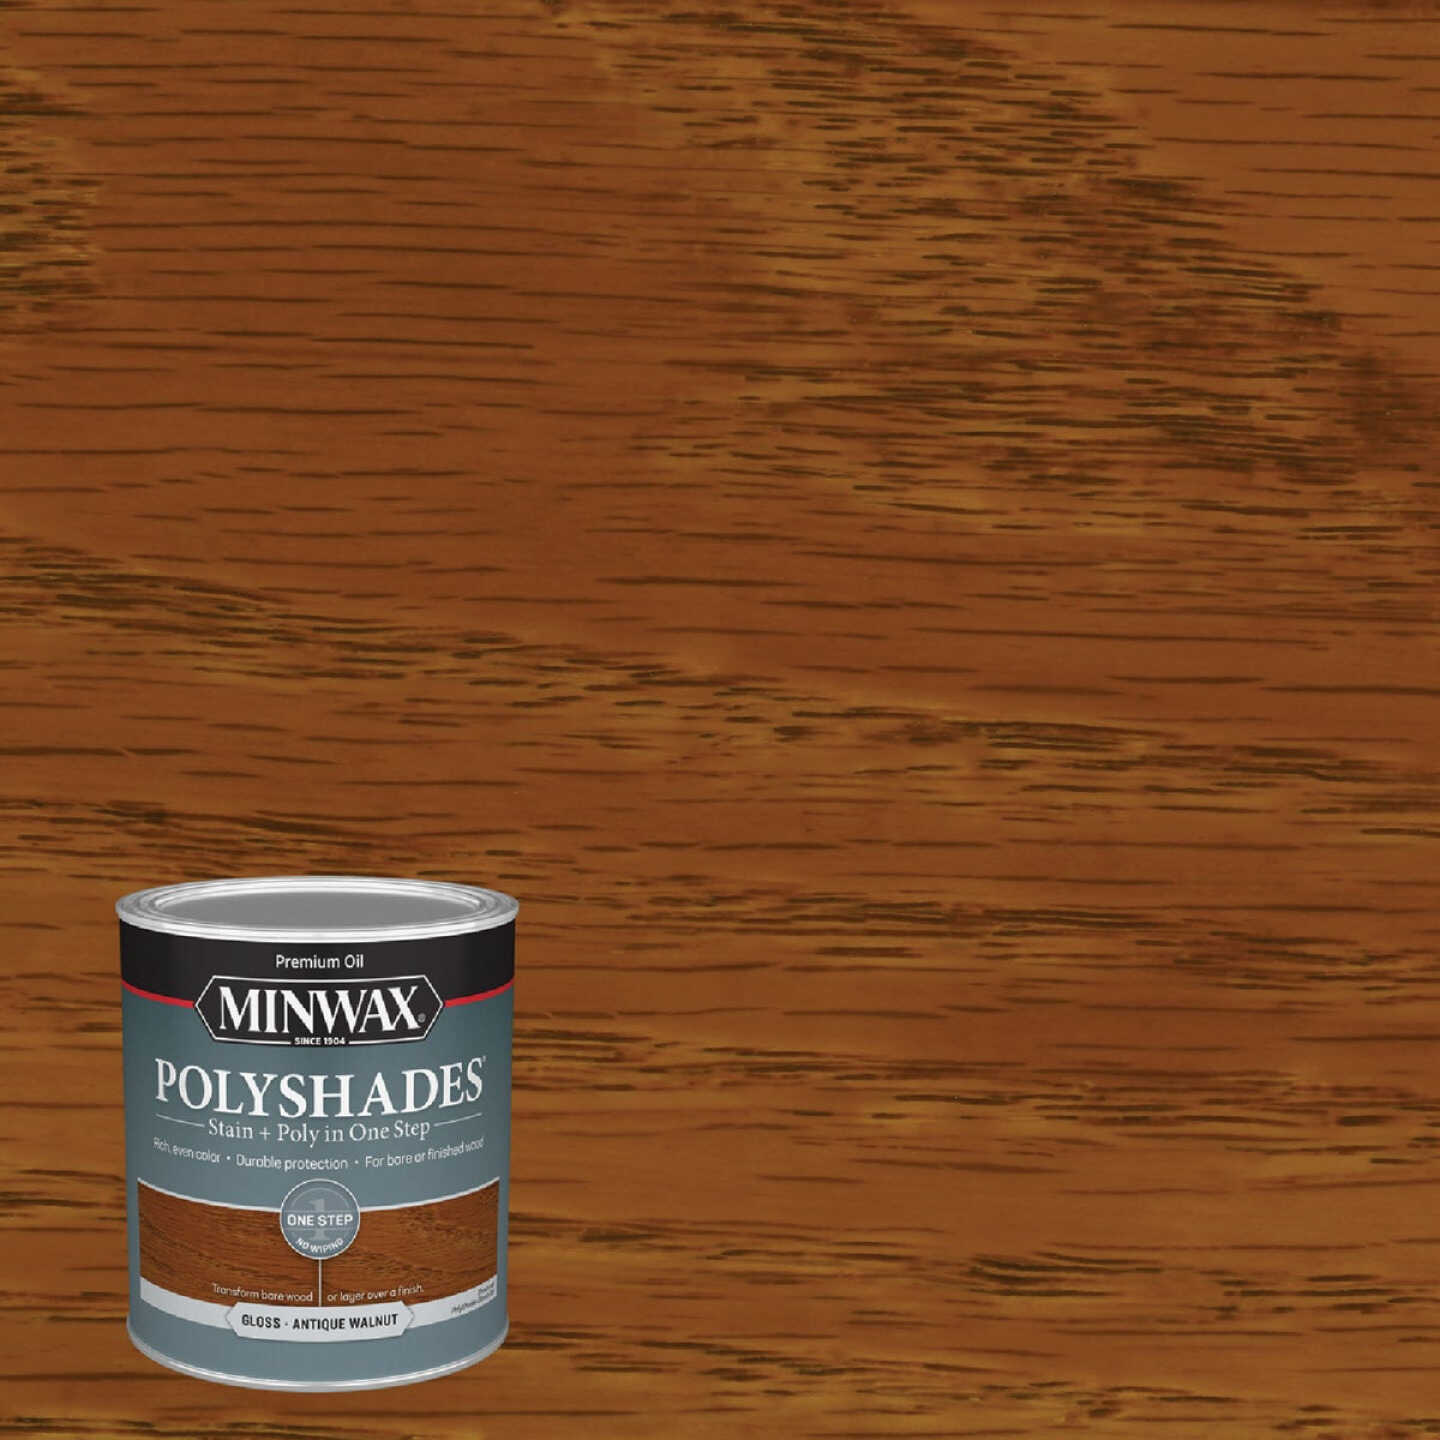 Minwax Polyshades 1/2 Pt. Gloss Stain & Finish Polyurethane In 1